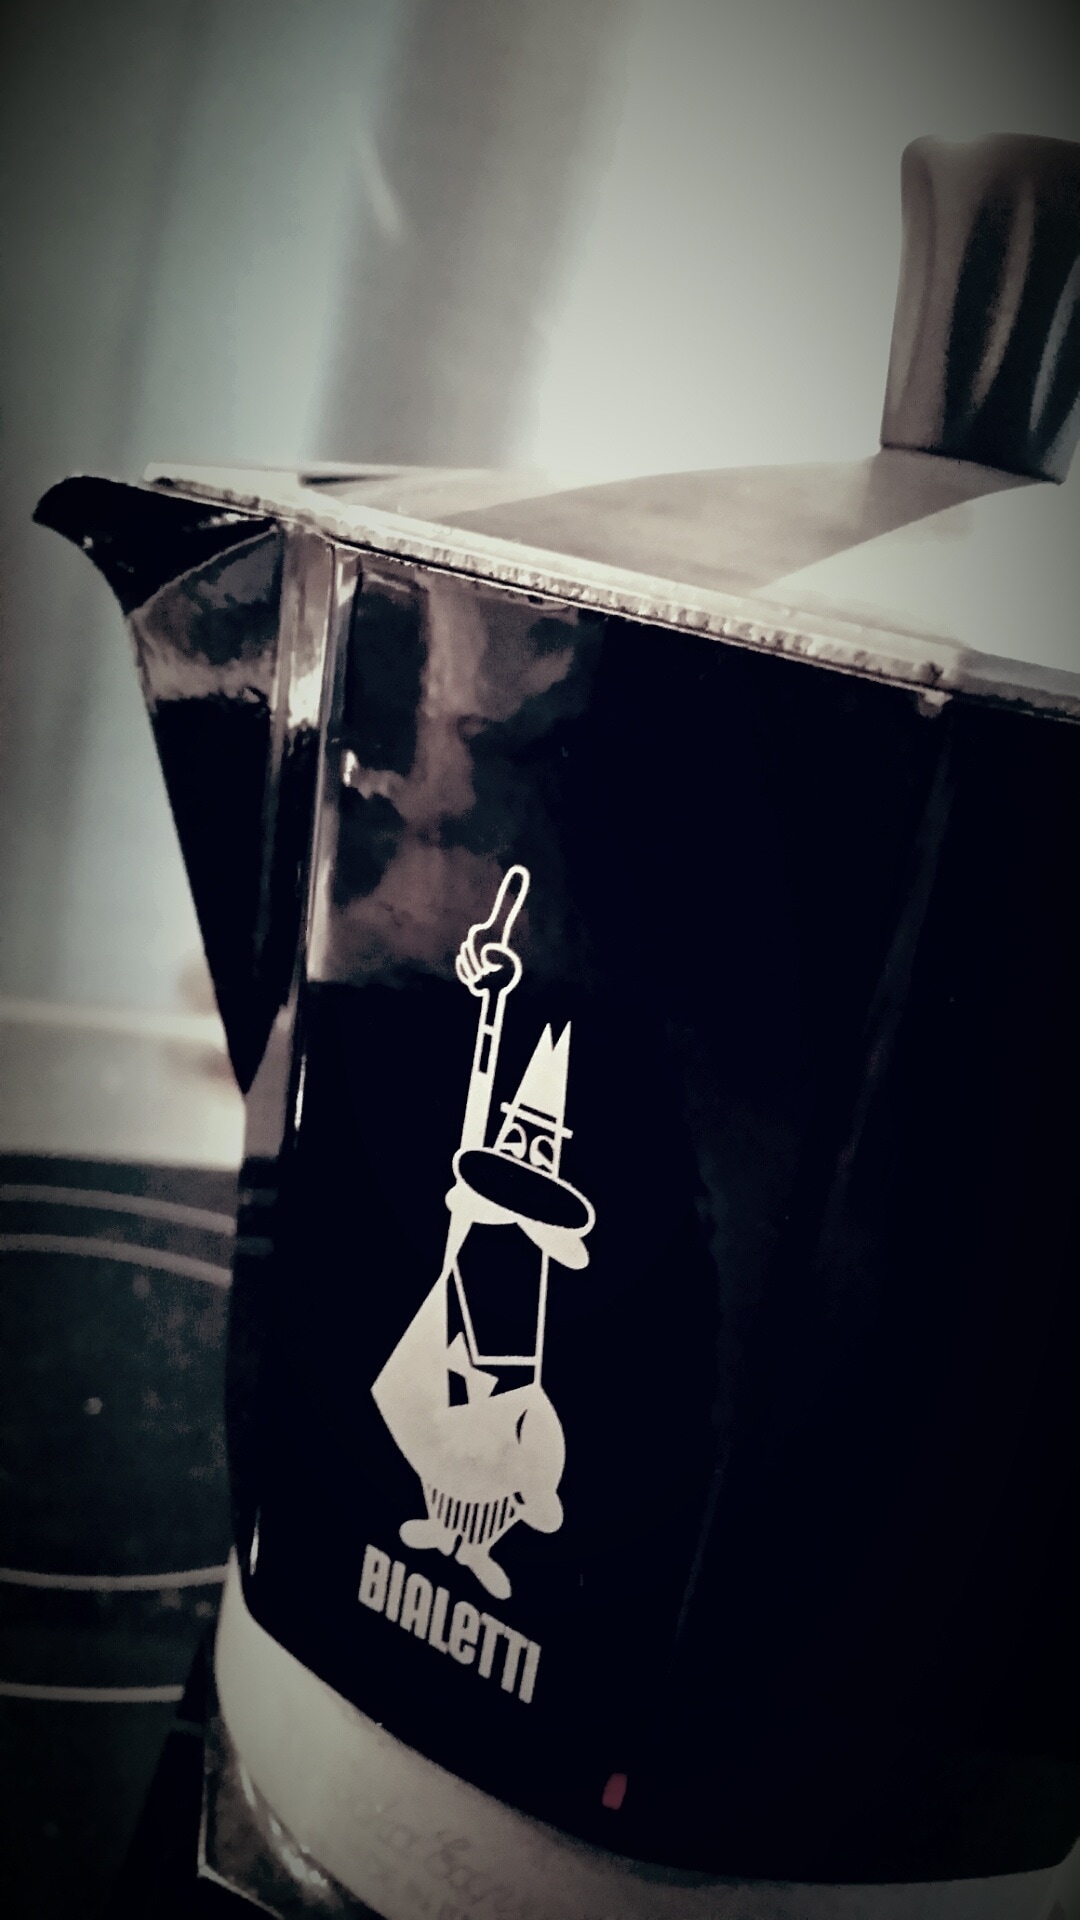 black bialetti electric kettle